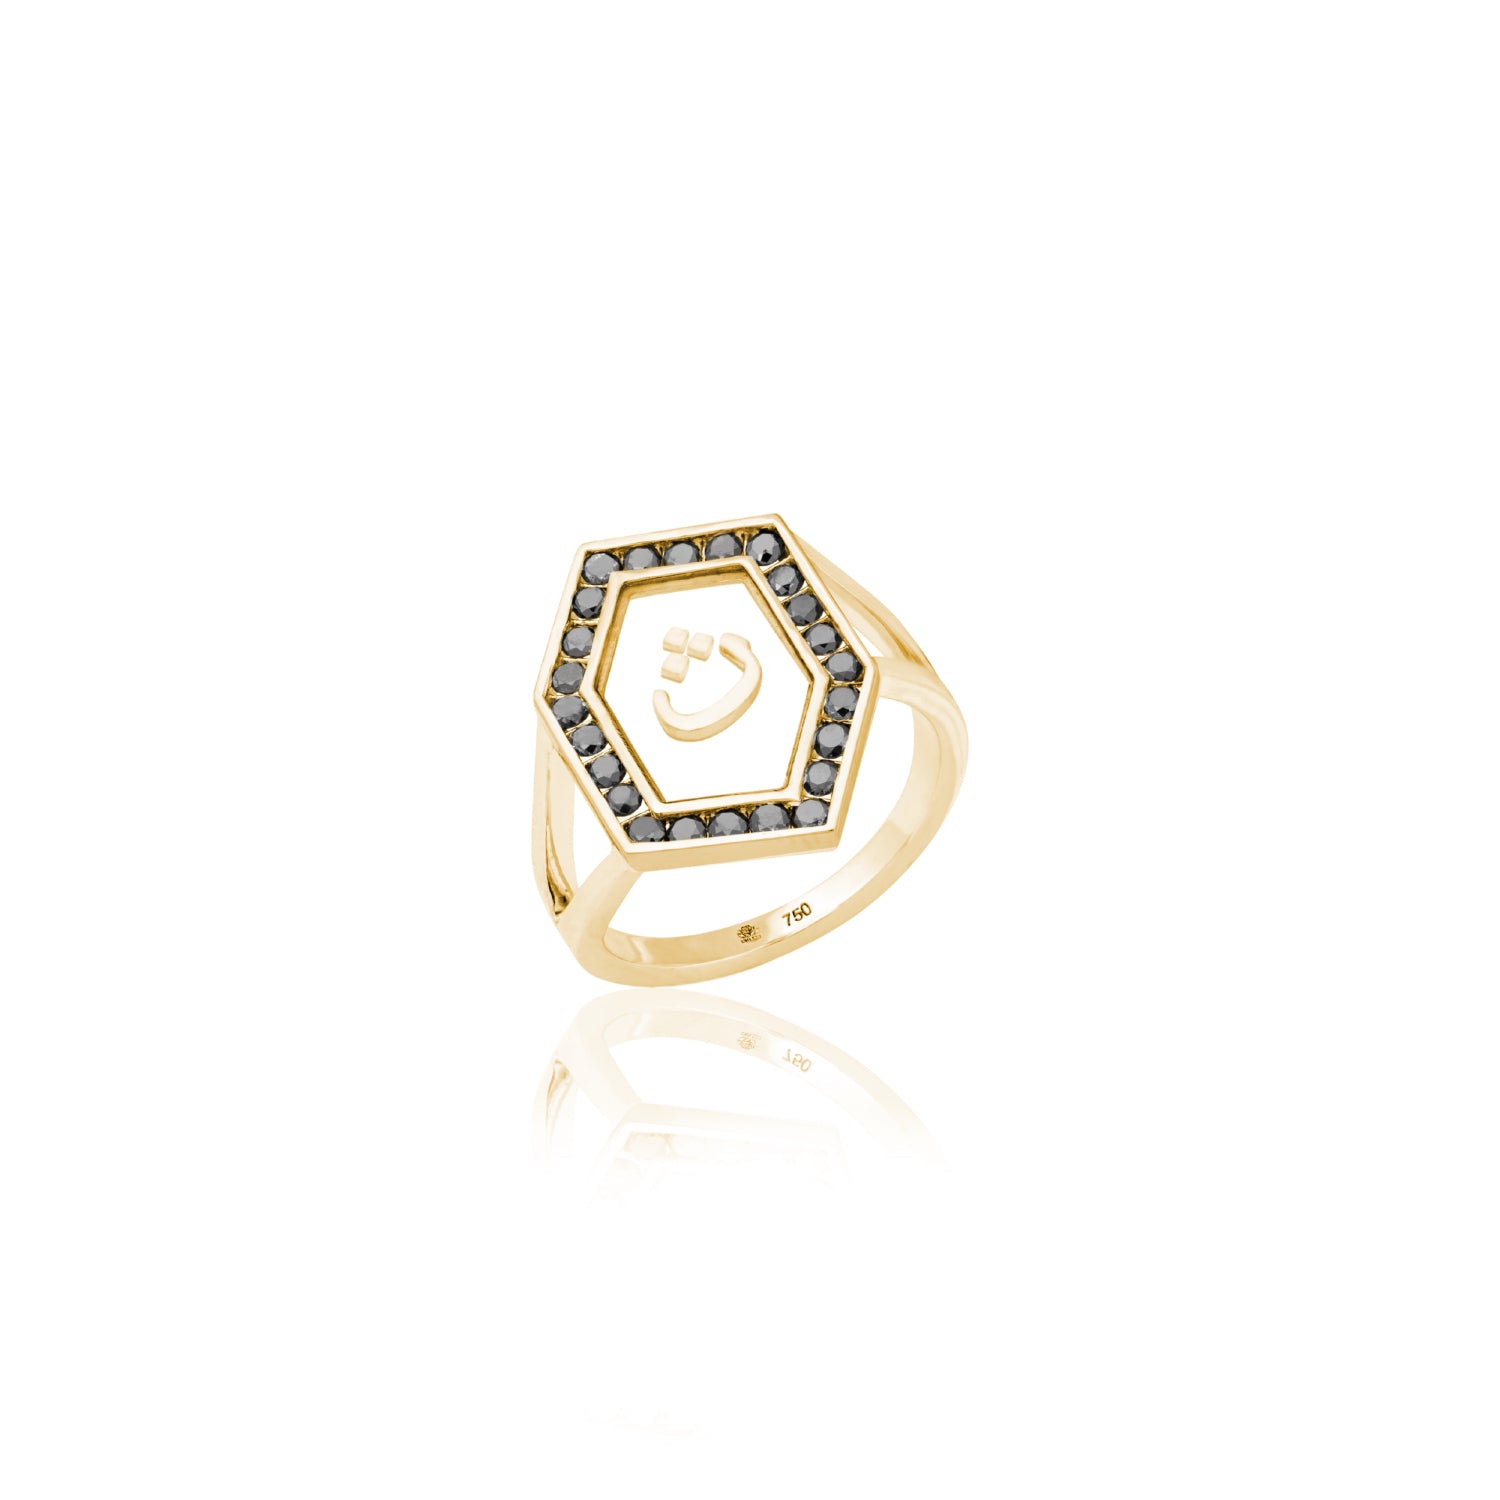 Qamoos 1.0 Letter ث Black Diamond Ring in Yellow Gold